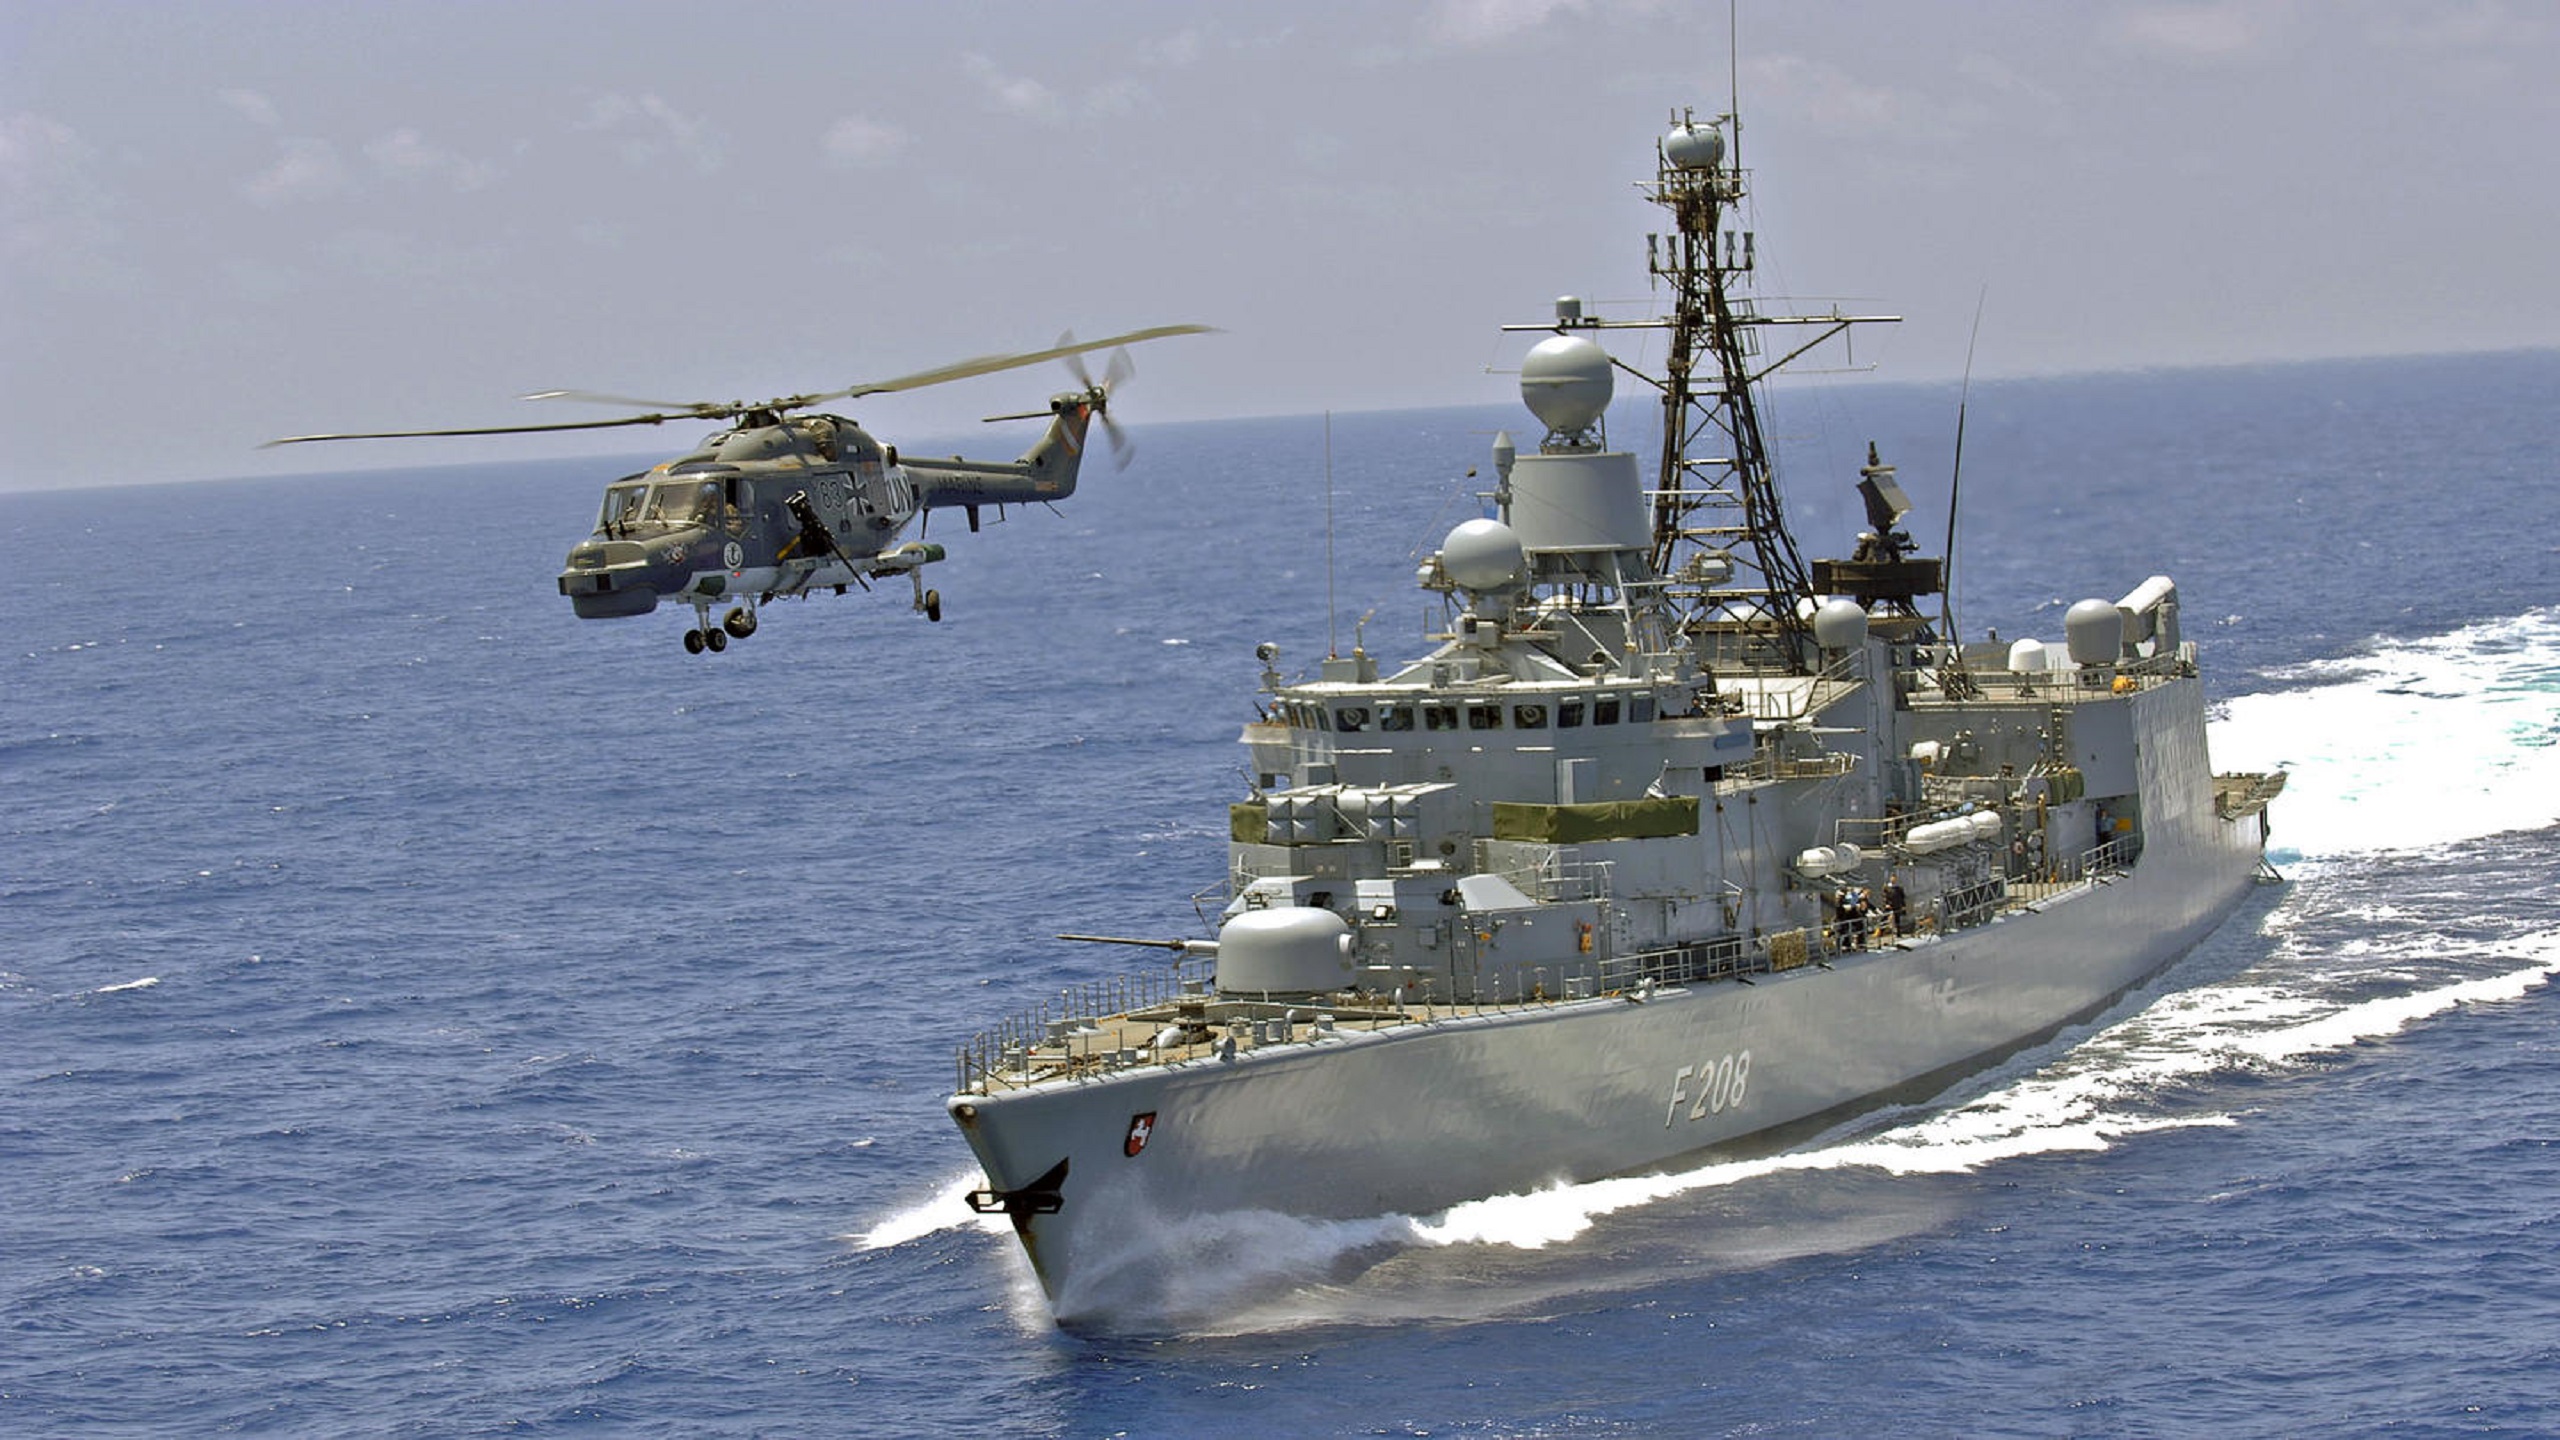 Germany To Supply Lebanon With Maritime Surveillance Equipment, Training